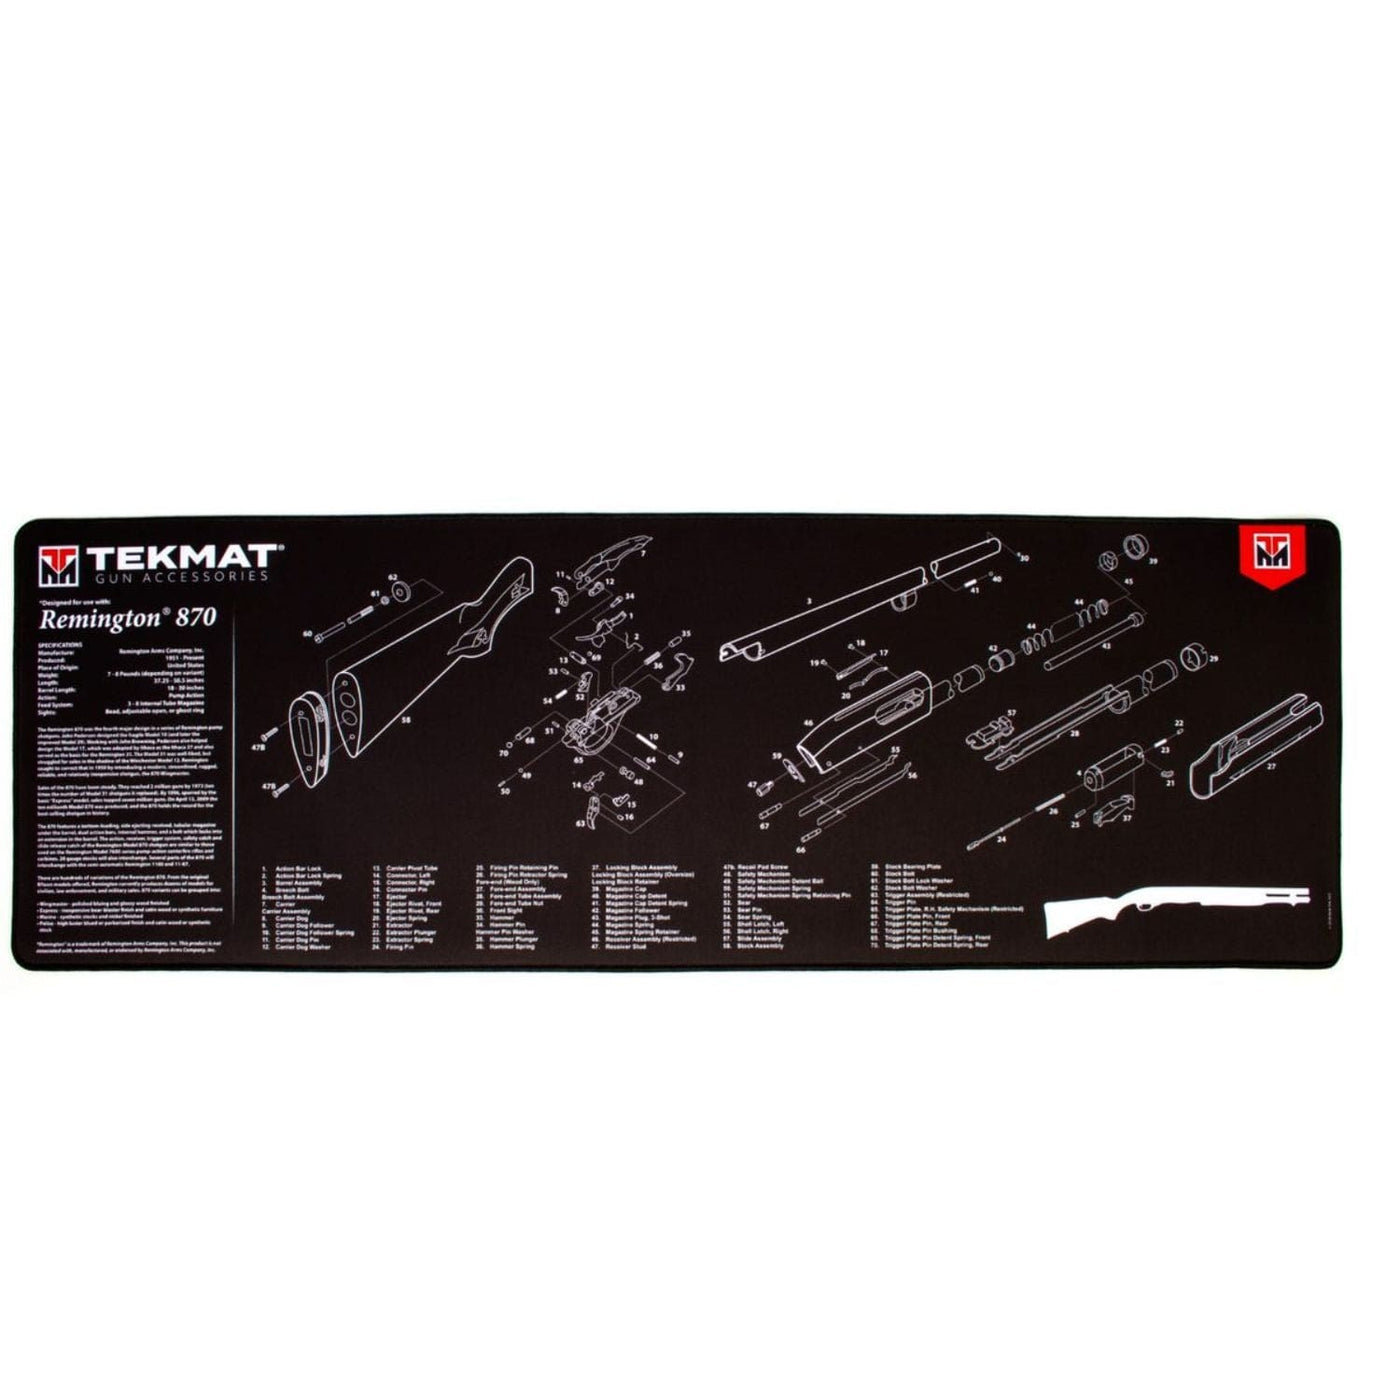 TekMat TekMat Ultra 44 Remingtotn 870 Gun Cleaning Mat Shooting